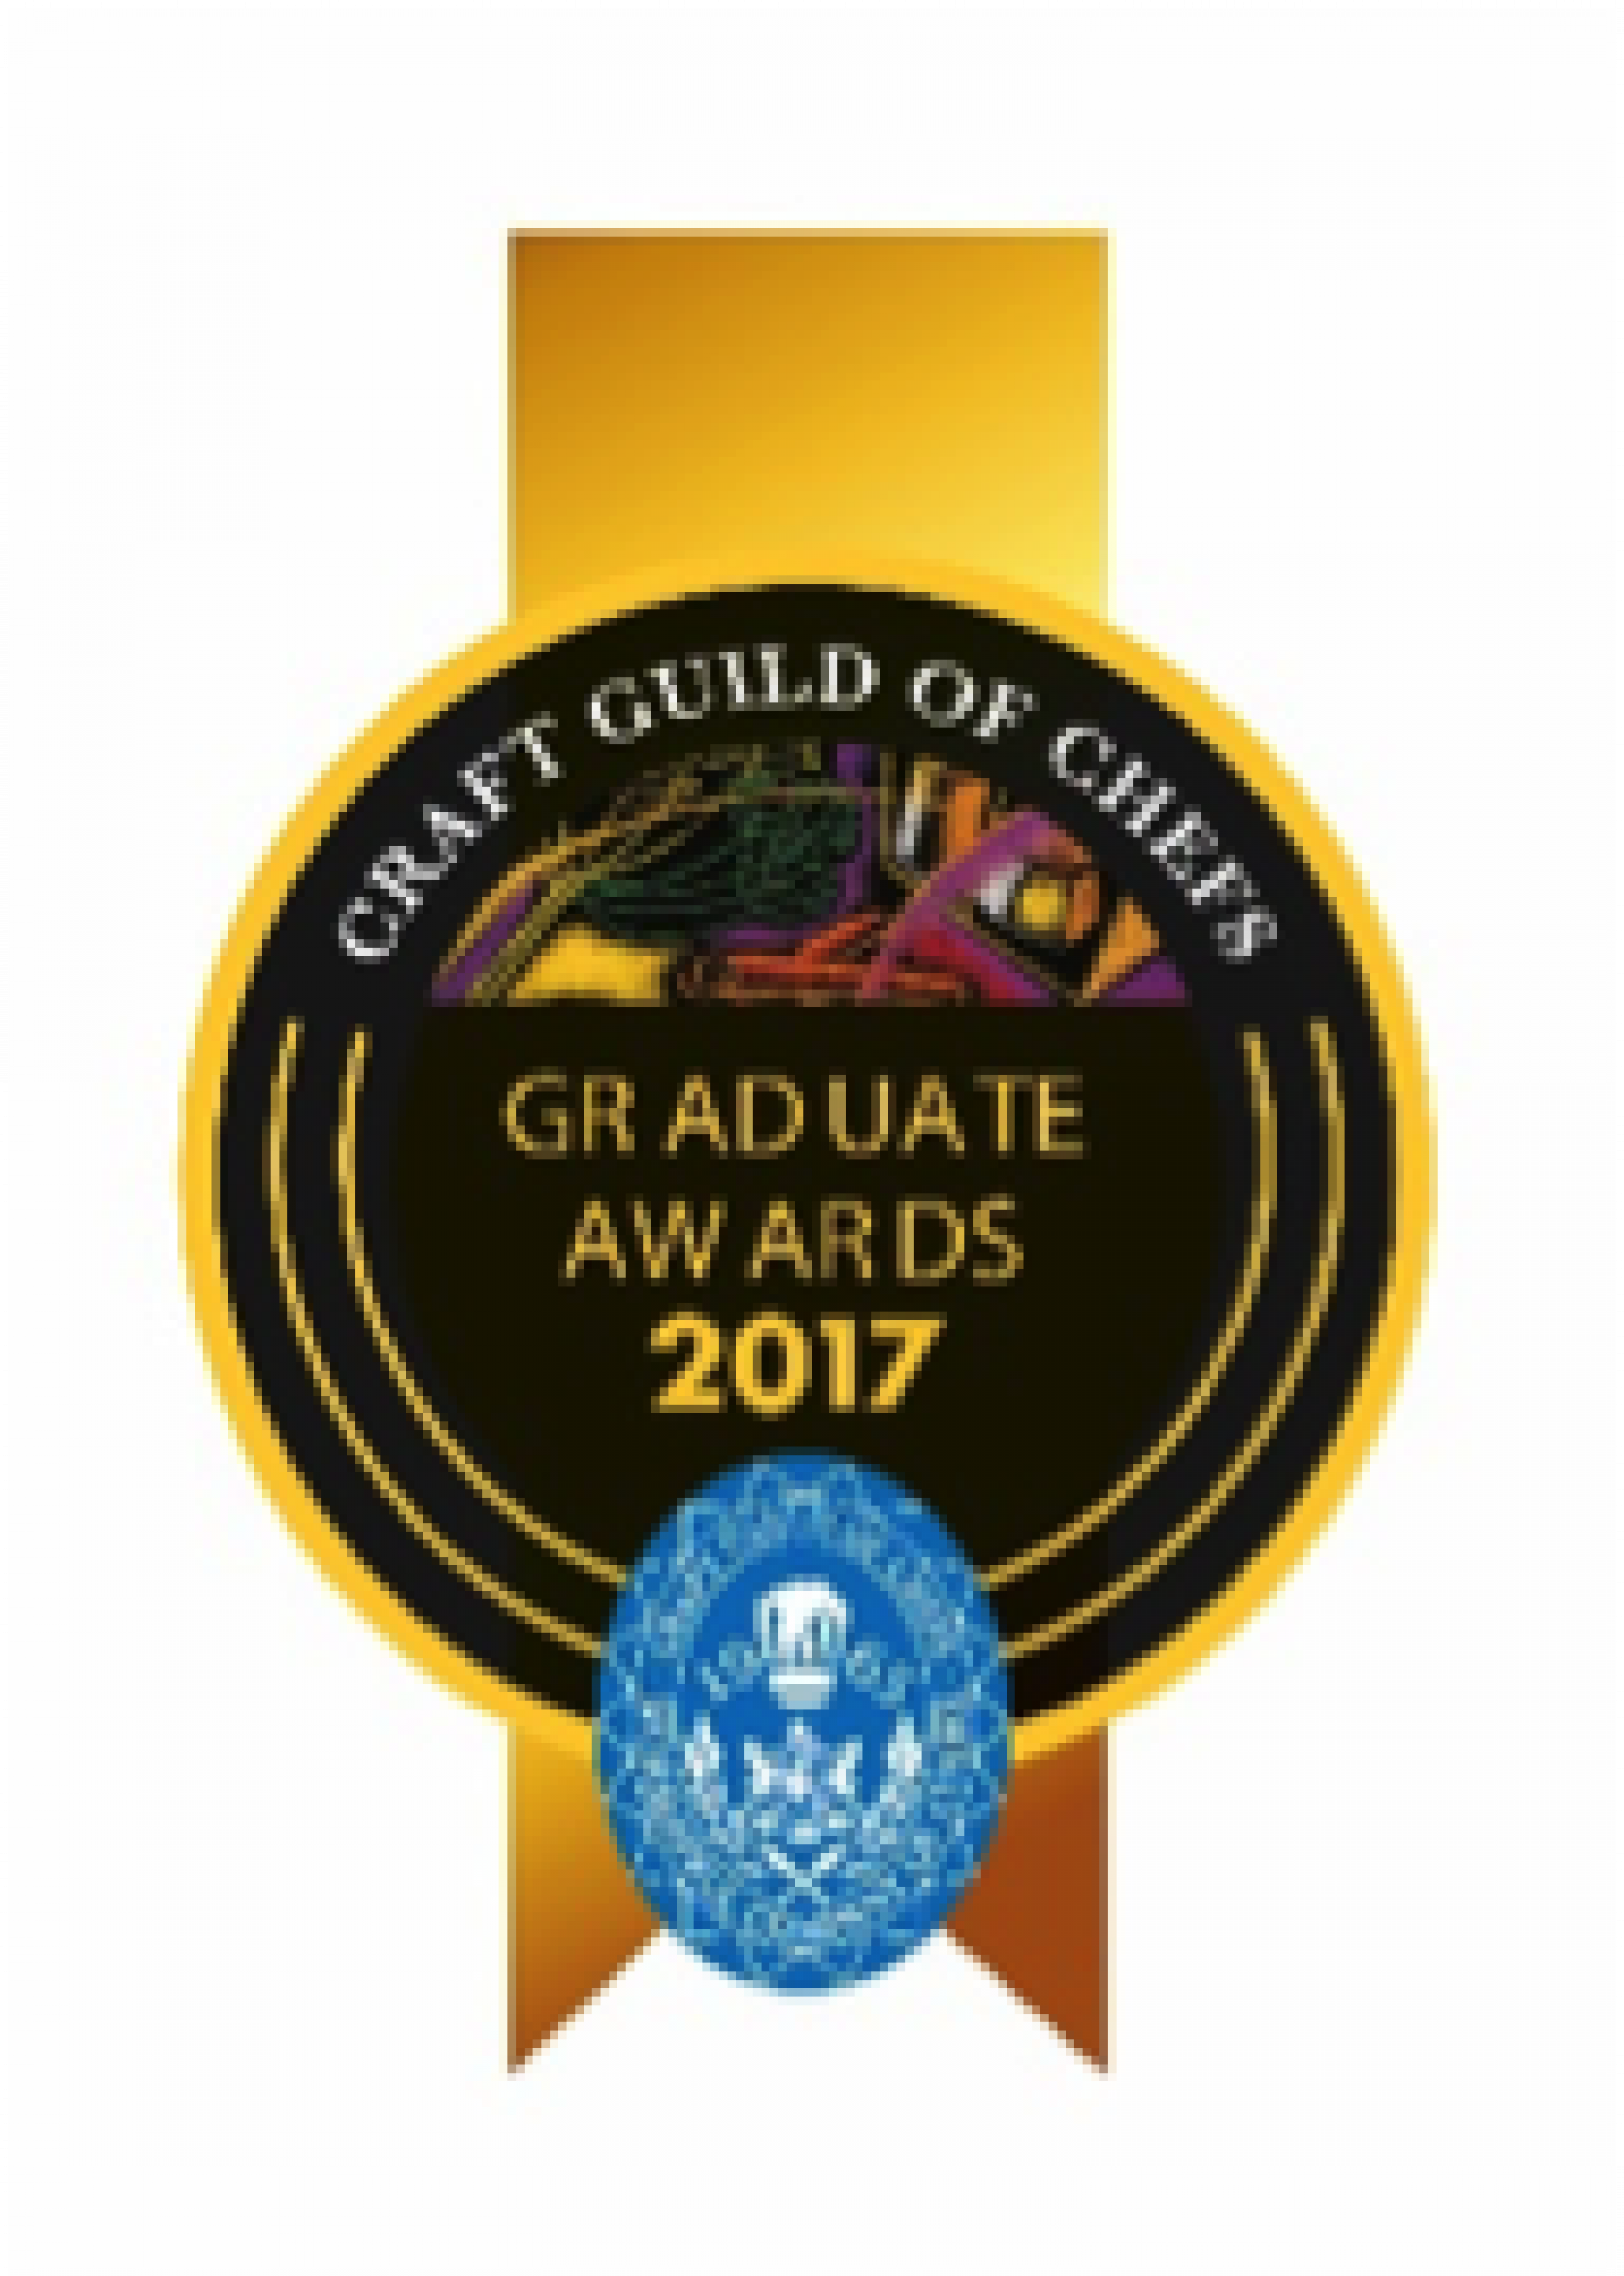 Graduate Awards 2017 